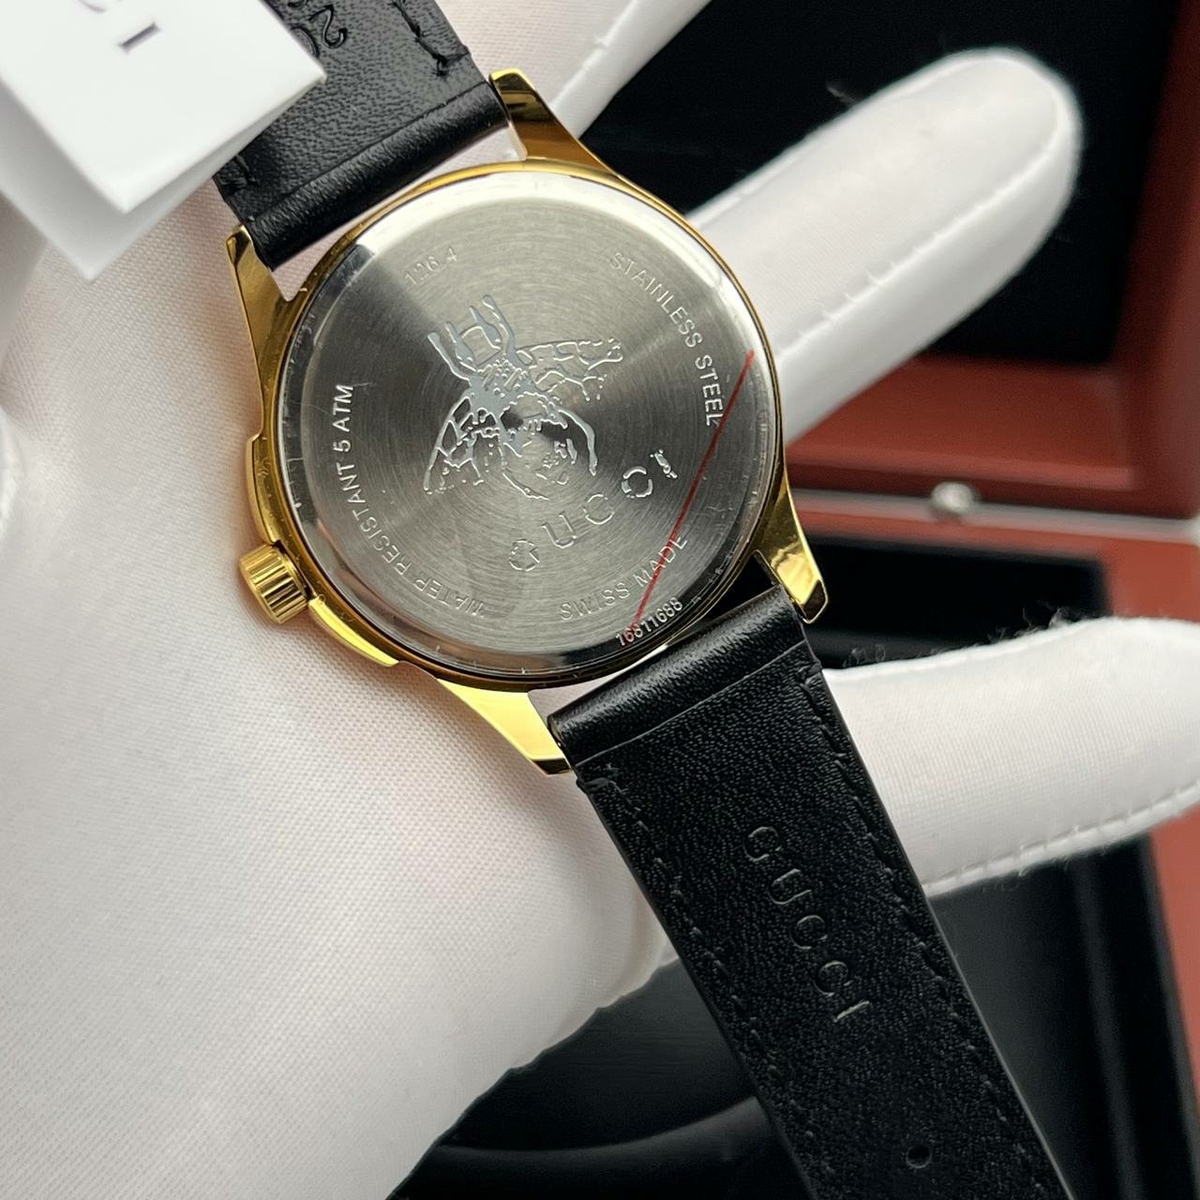 Gucci часы #1 в «Globestyle» арт.764863TI